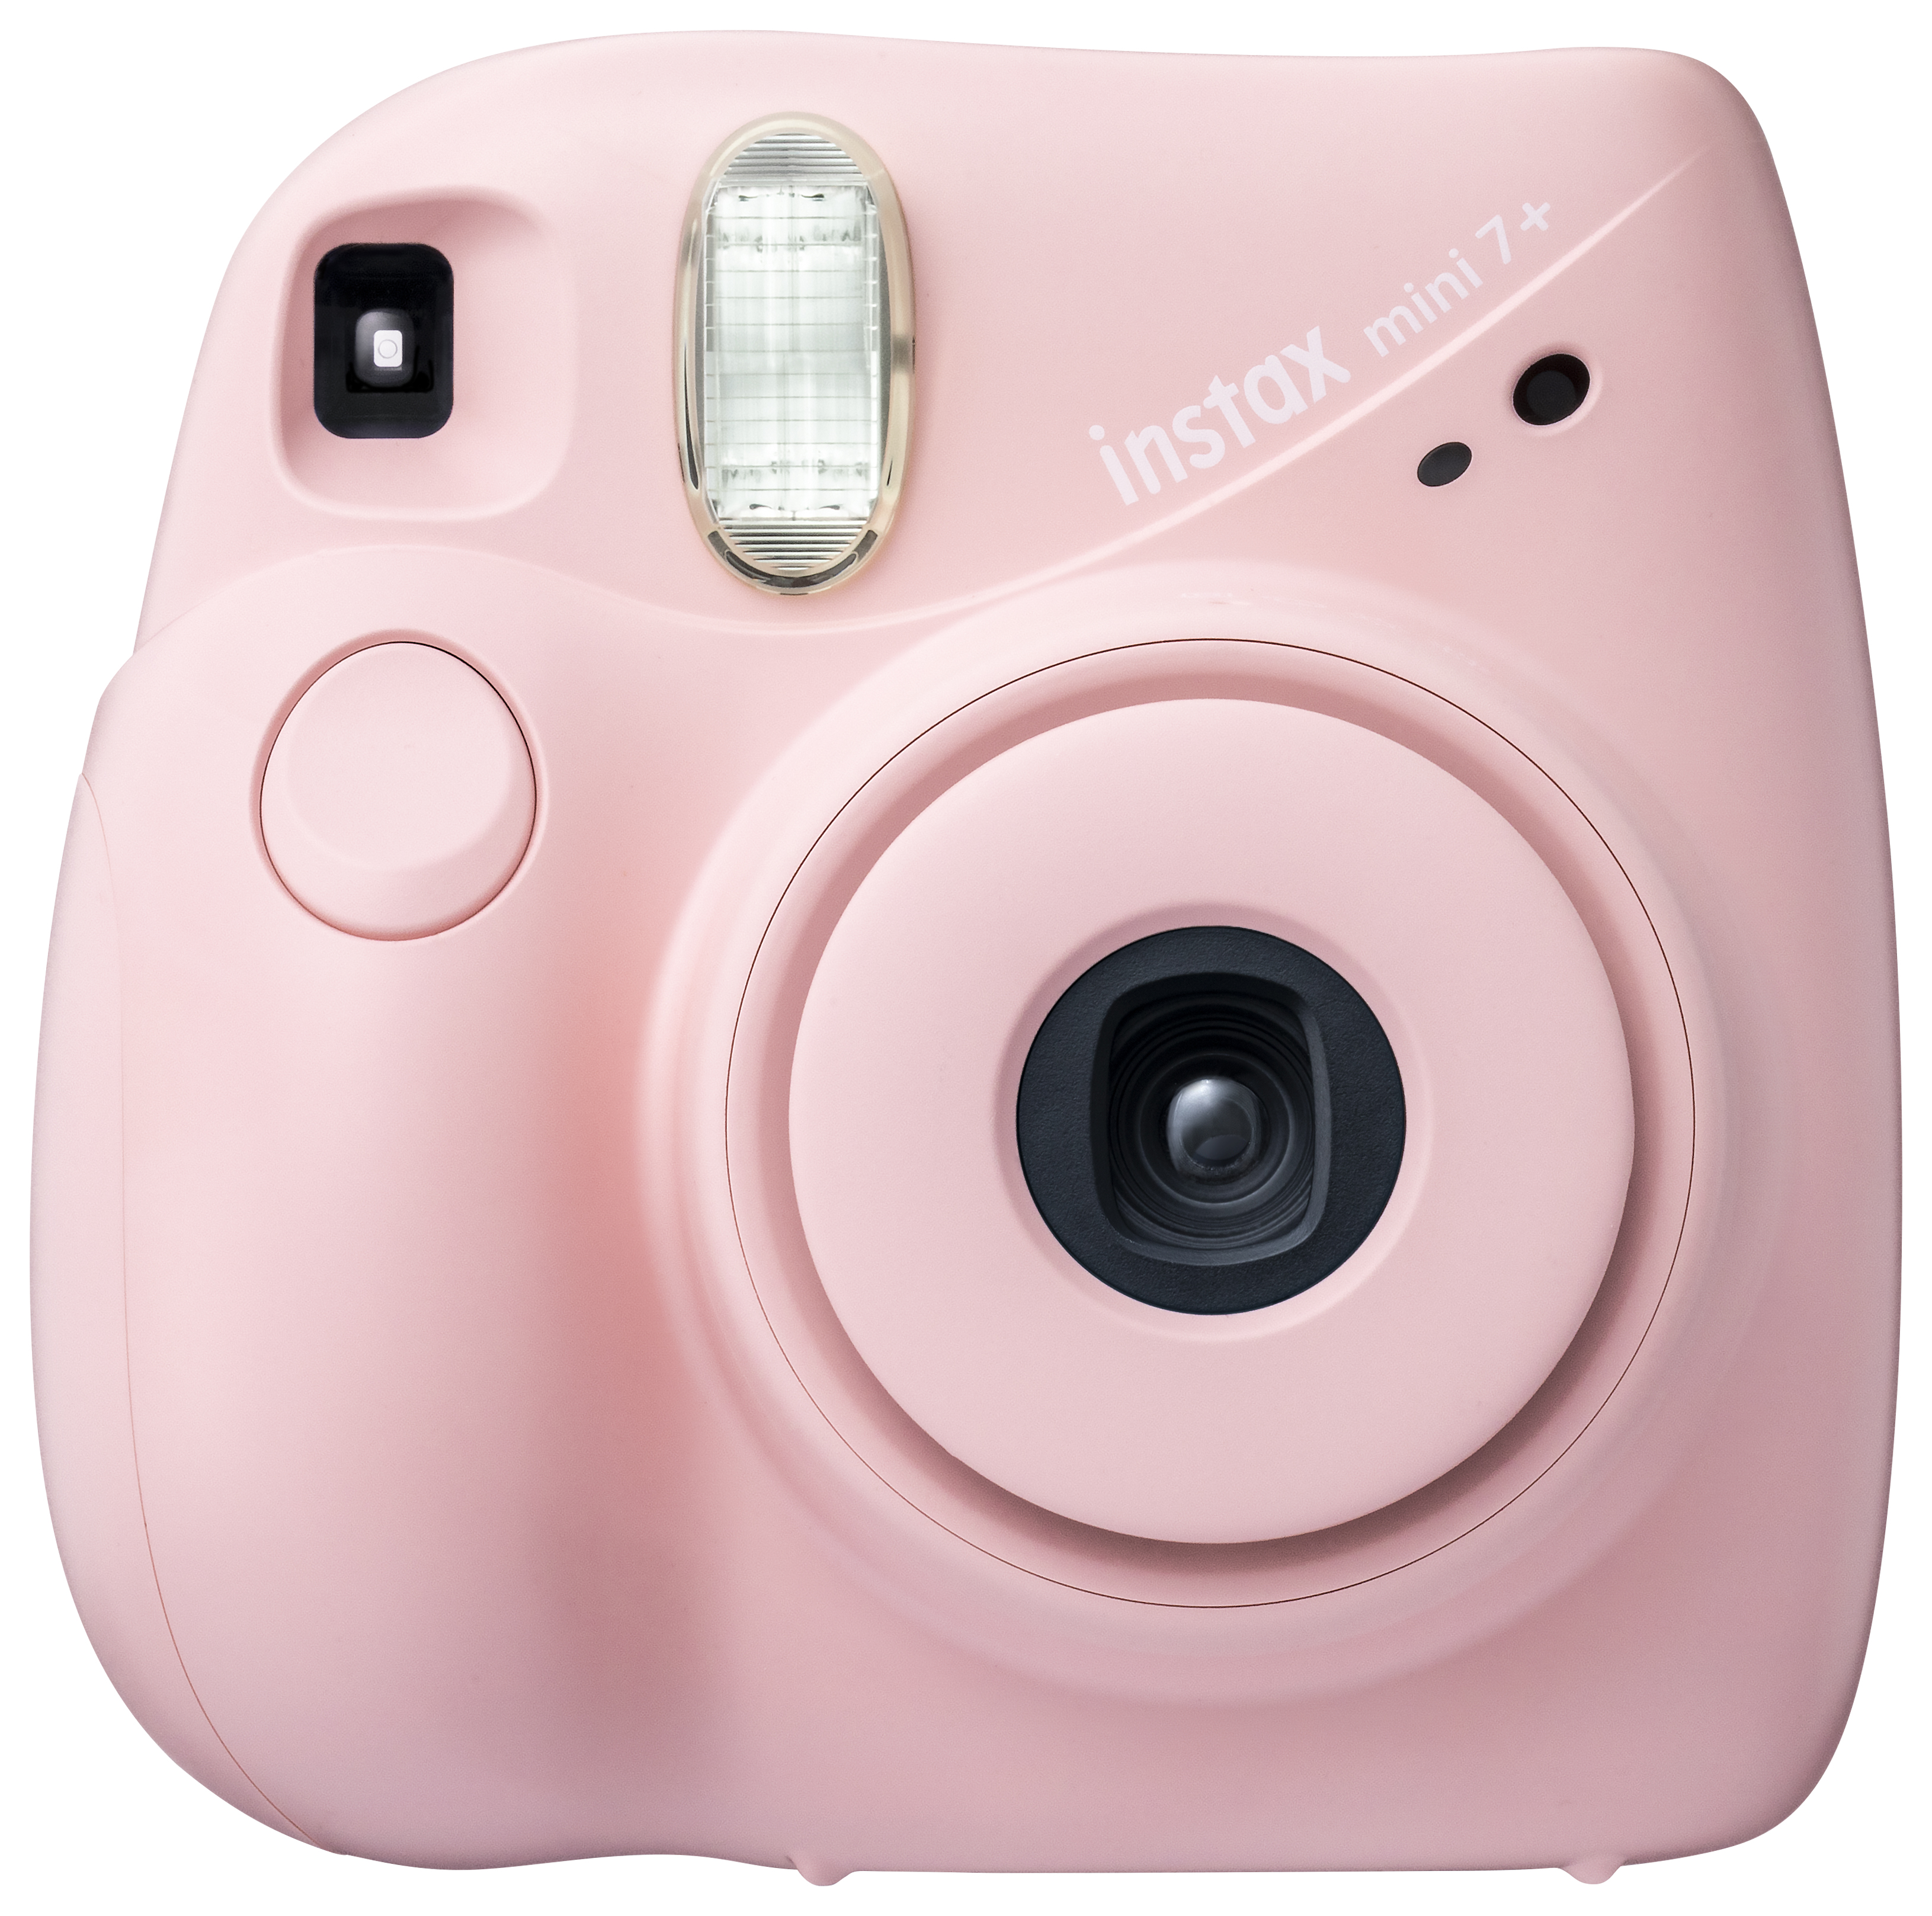 Fujifilm INSTAX Mini 7+ Bundle (10-Pack Film, Album, Camera Case, Stickers), Light Pink, Brand New Condition - image 2 of 11